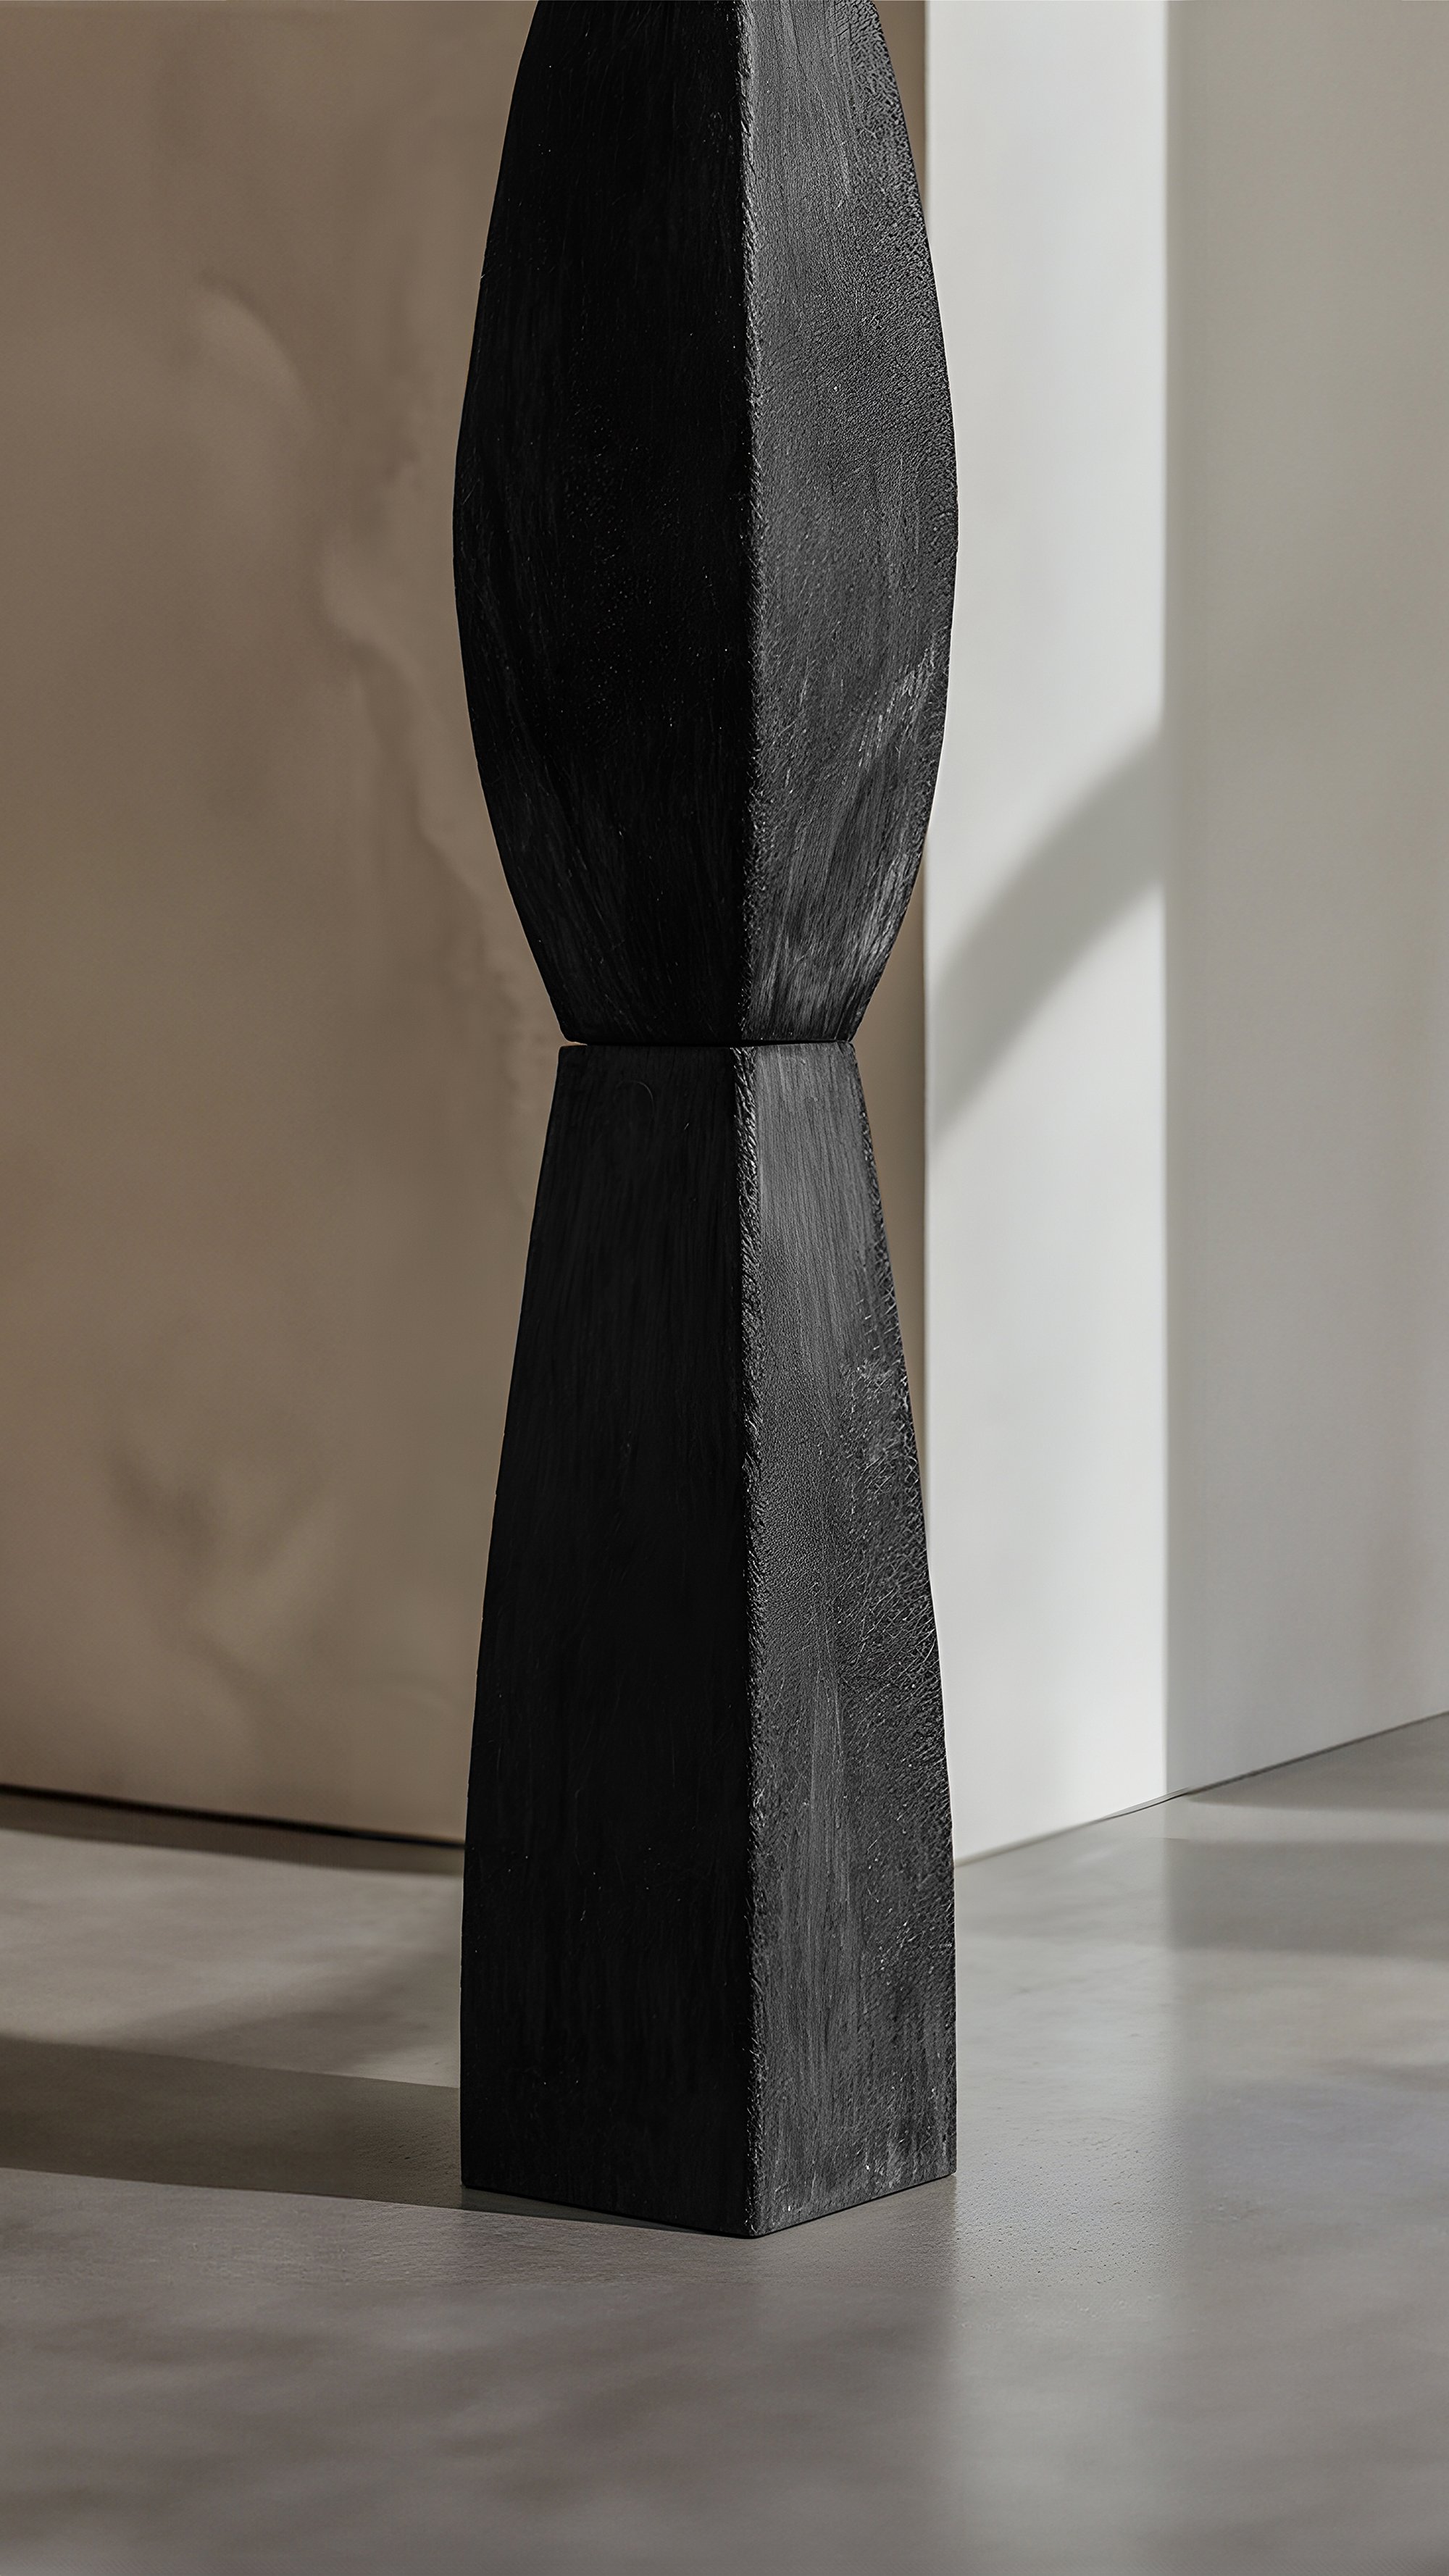 Sleek Black Solid Wood Sculpture, NONO's Art, Still Stand No82 -4.jpg